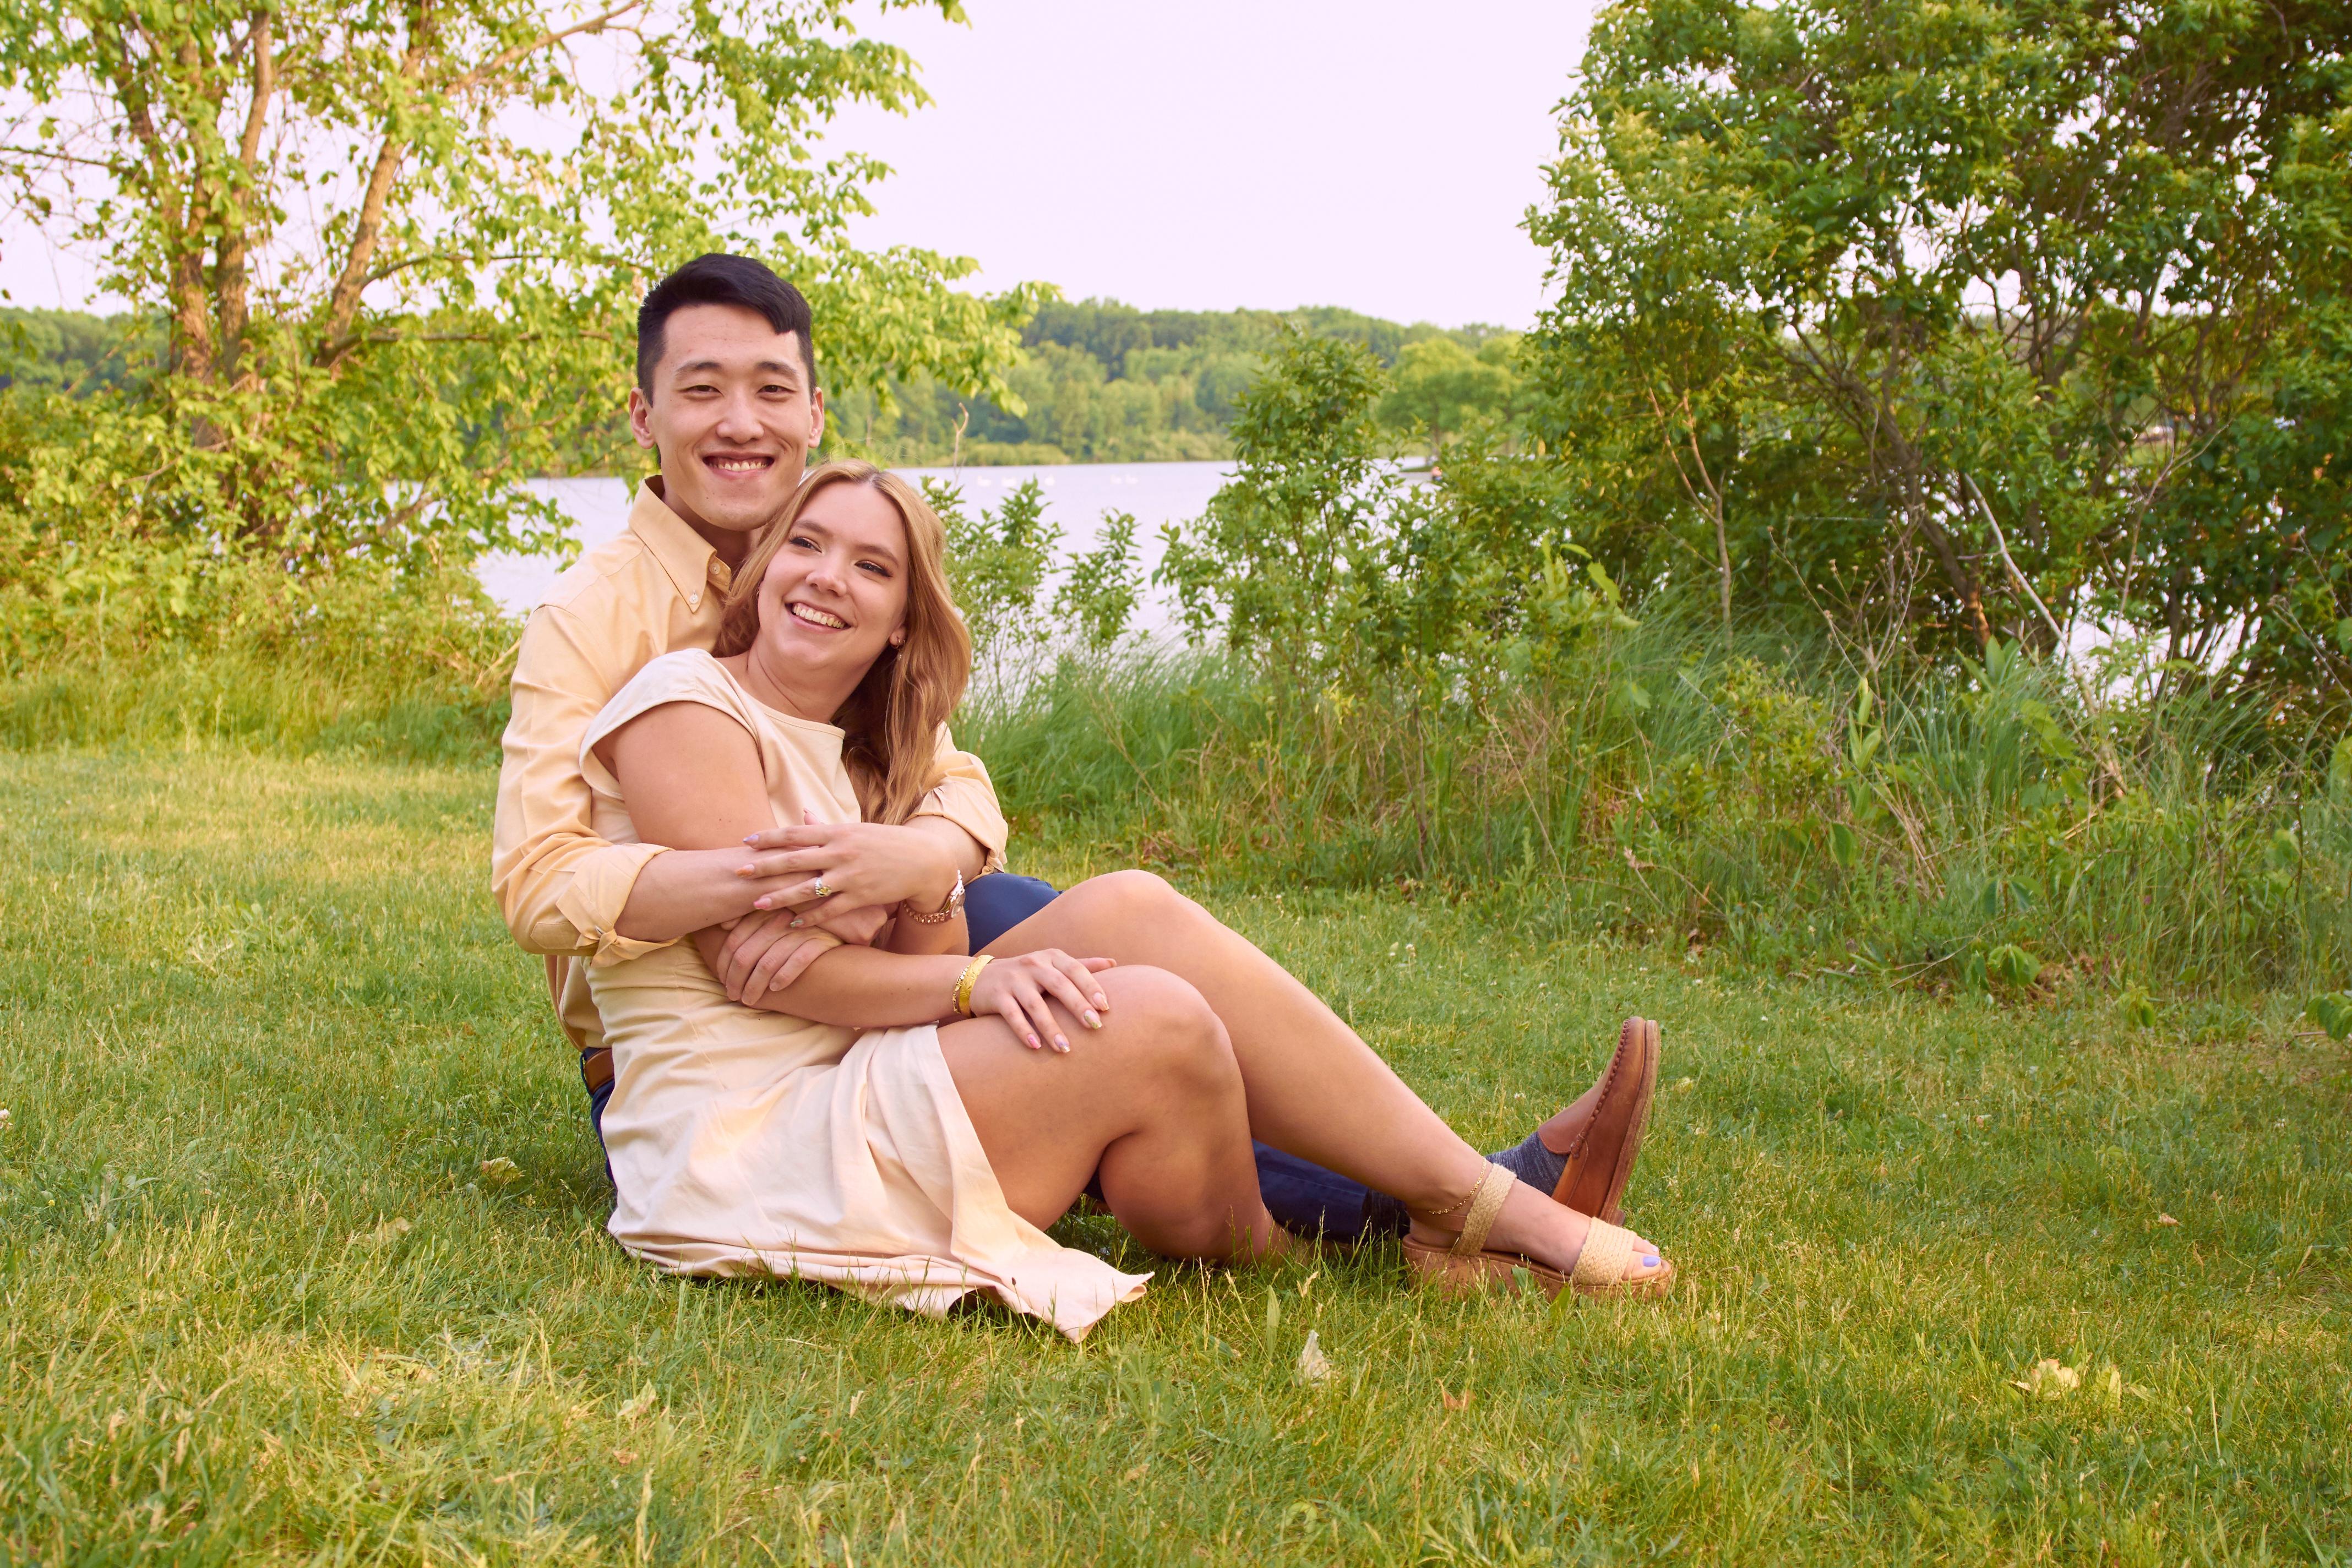 The Wedding Website of Danielle DeJonge and Ryan Li